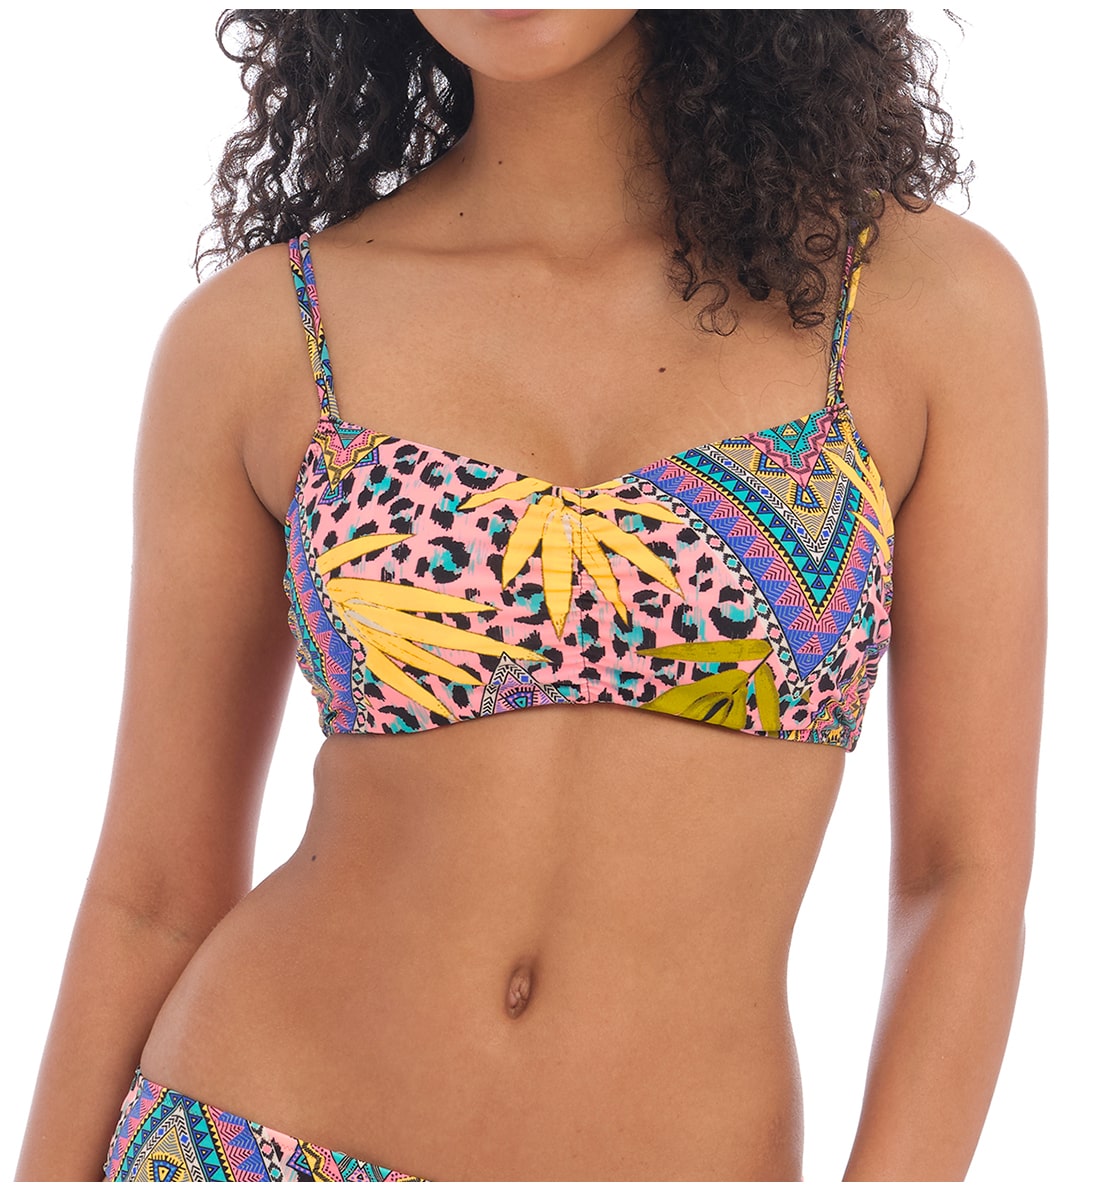 Freya Cala Fiesta Convertible Underwire Bralette Bikini Top (200914),30D,Multi - Multi,30D